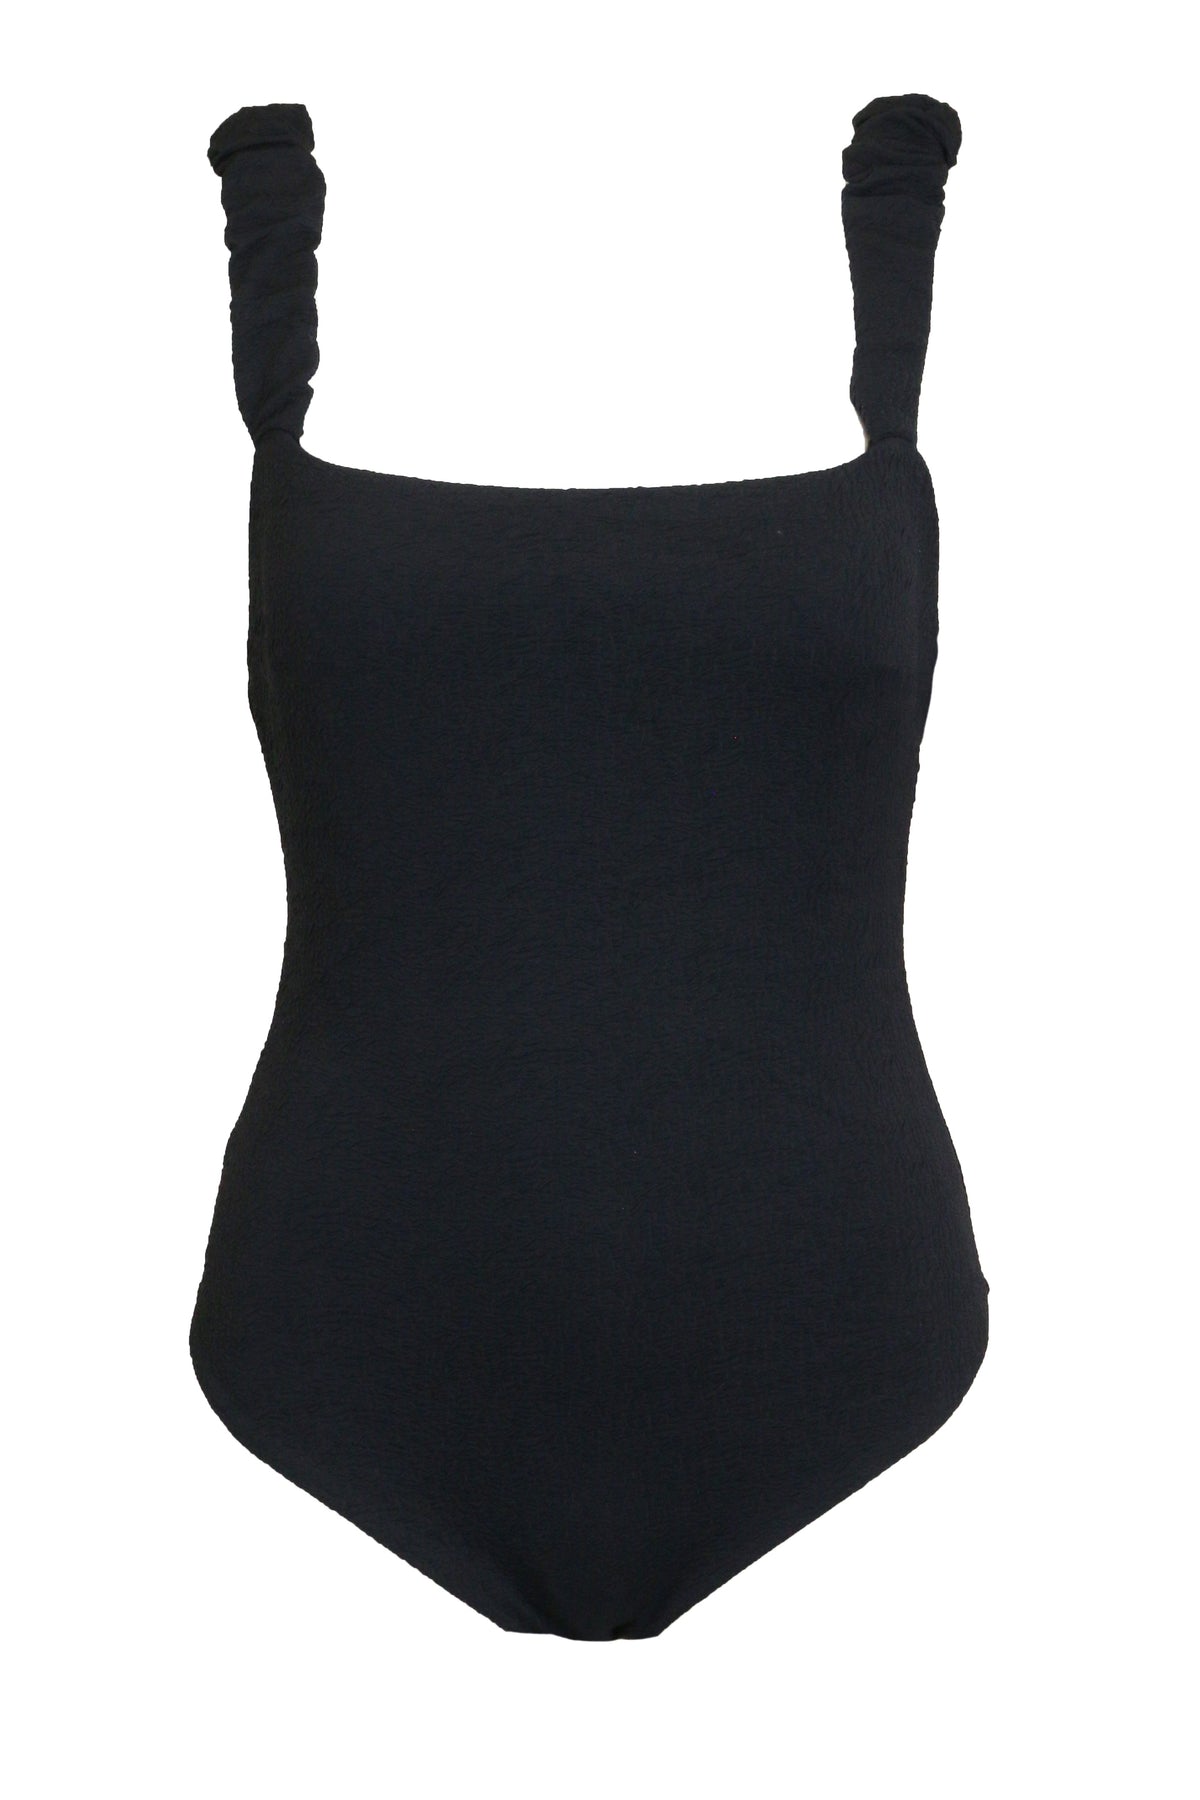 Undress Code Bodysuit Black / S Wild Cat Swimsuit - Black